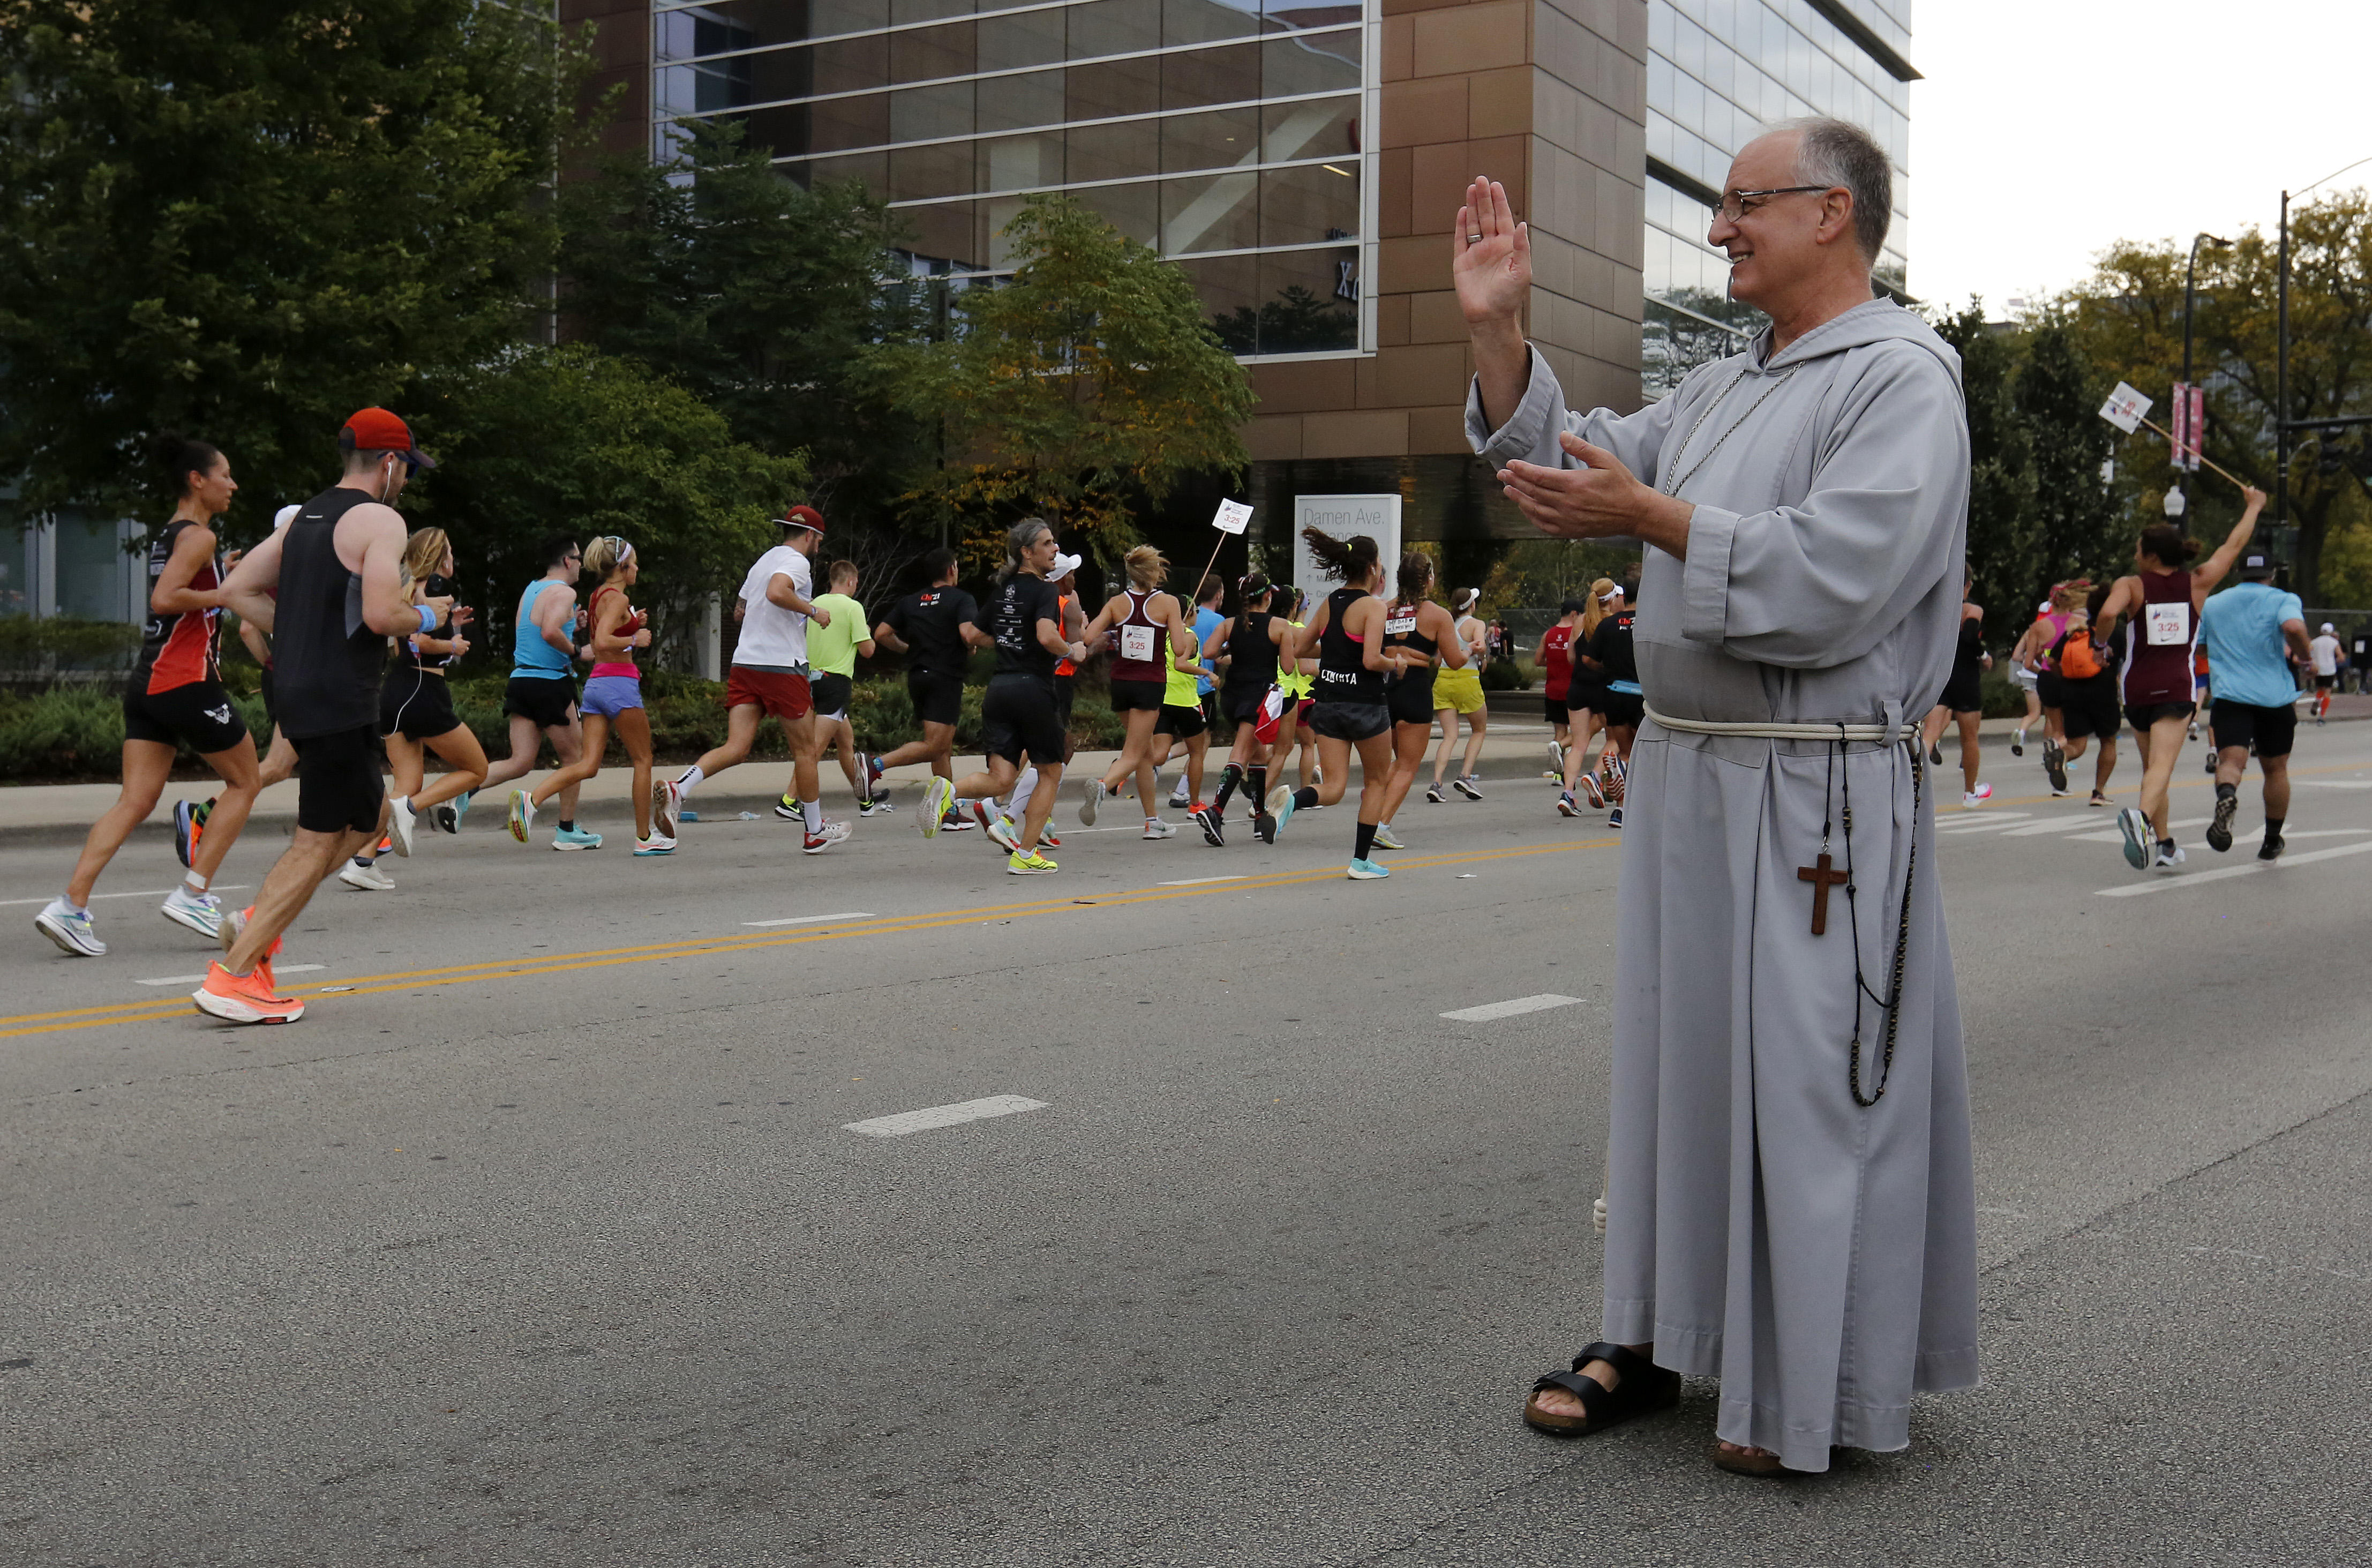 Bishop Bob blessing runners at the 2022 Chicago Marathon!